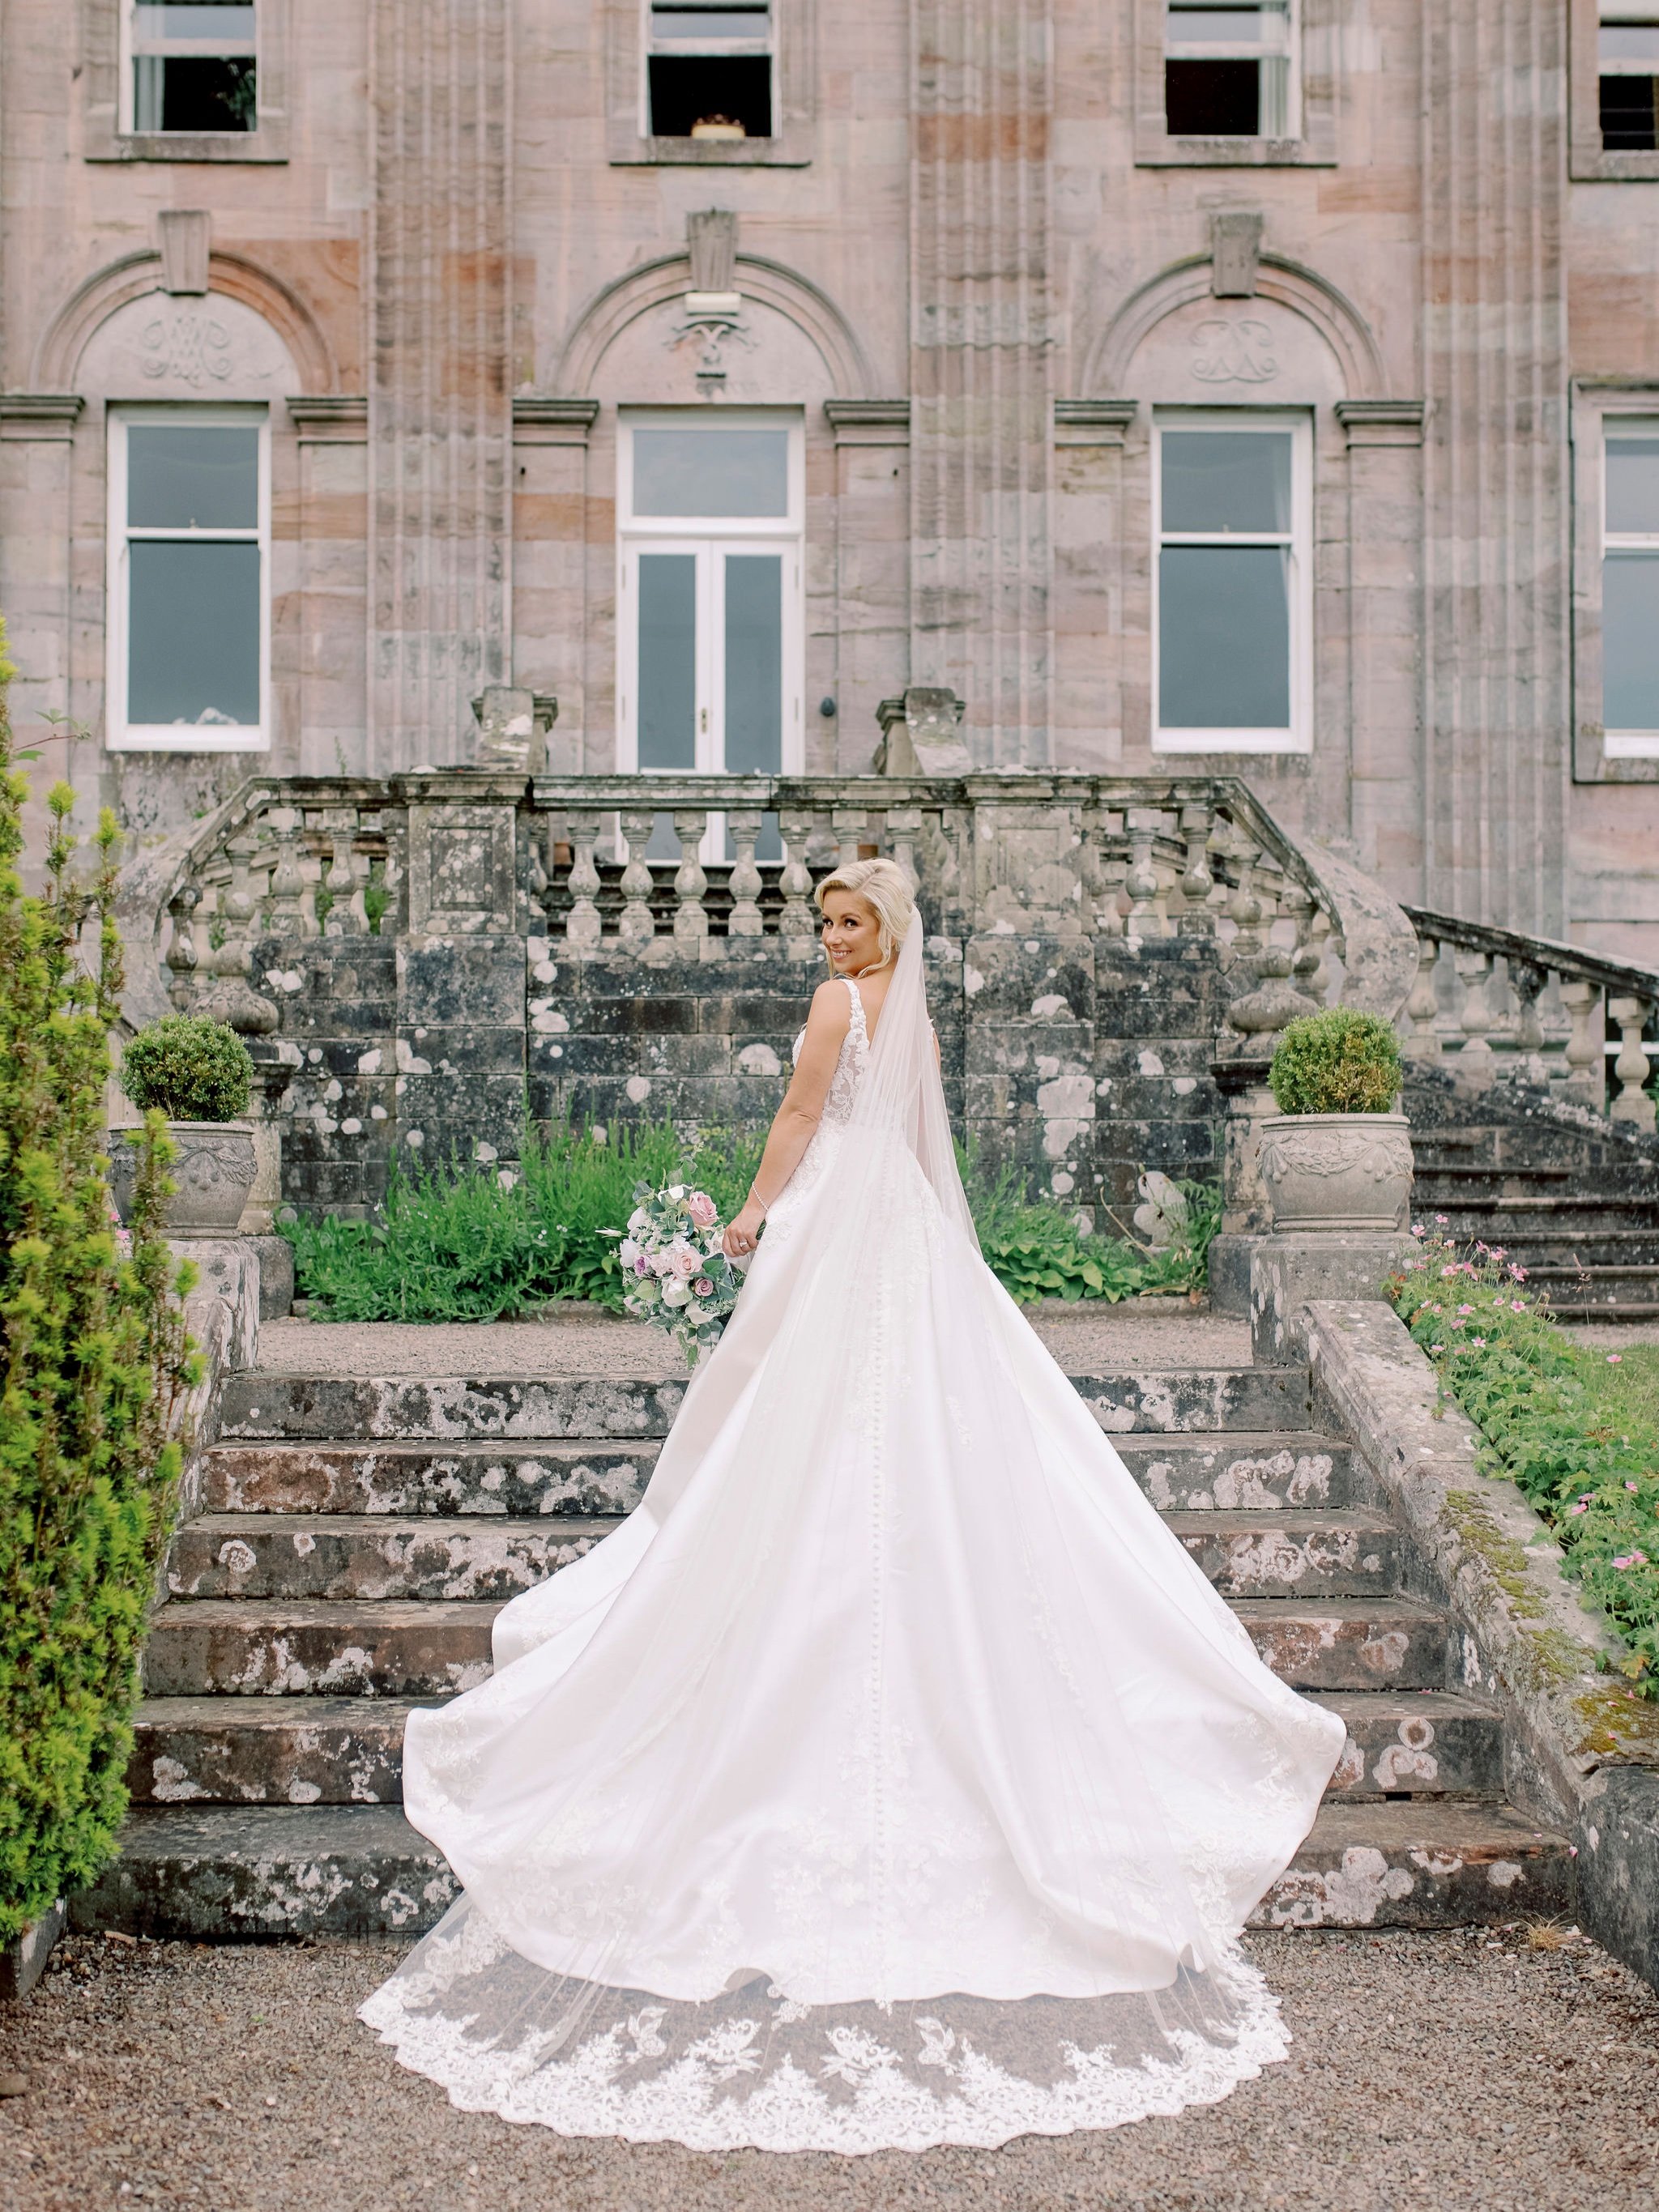 34_springkell-house-wedding-photographer-dumfries-scotland-back-wedding-dress-veil-train.jpg